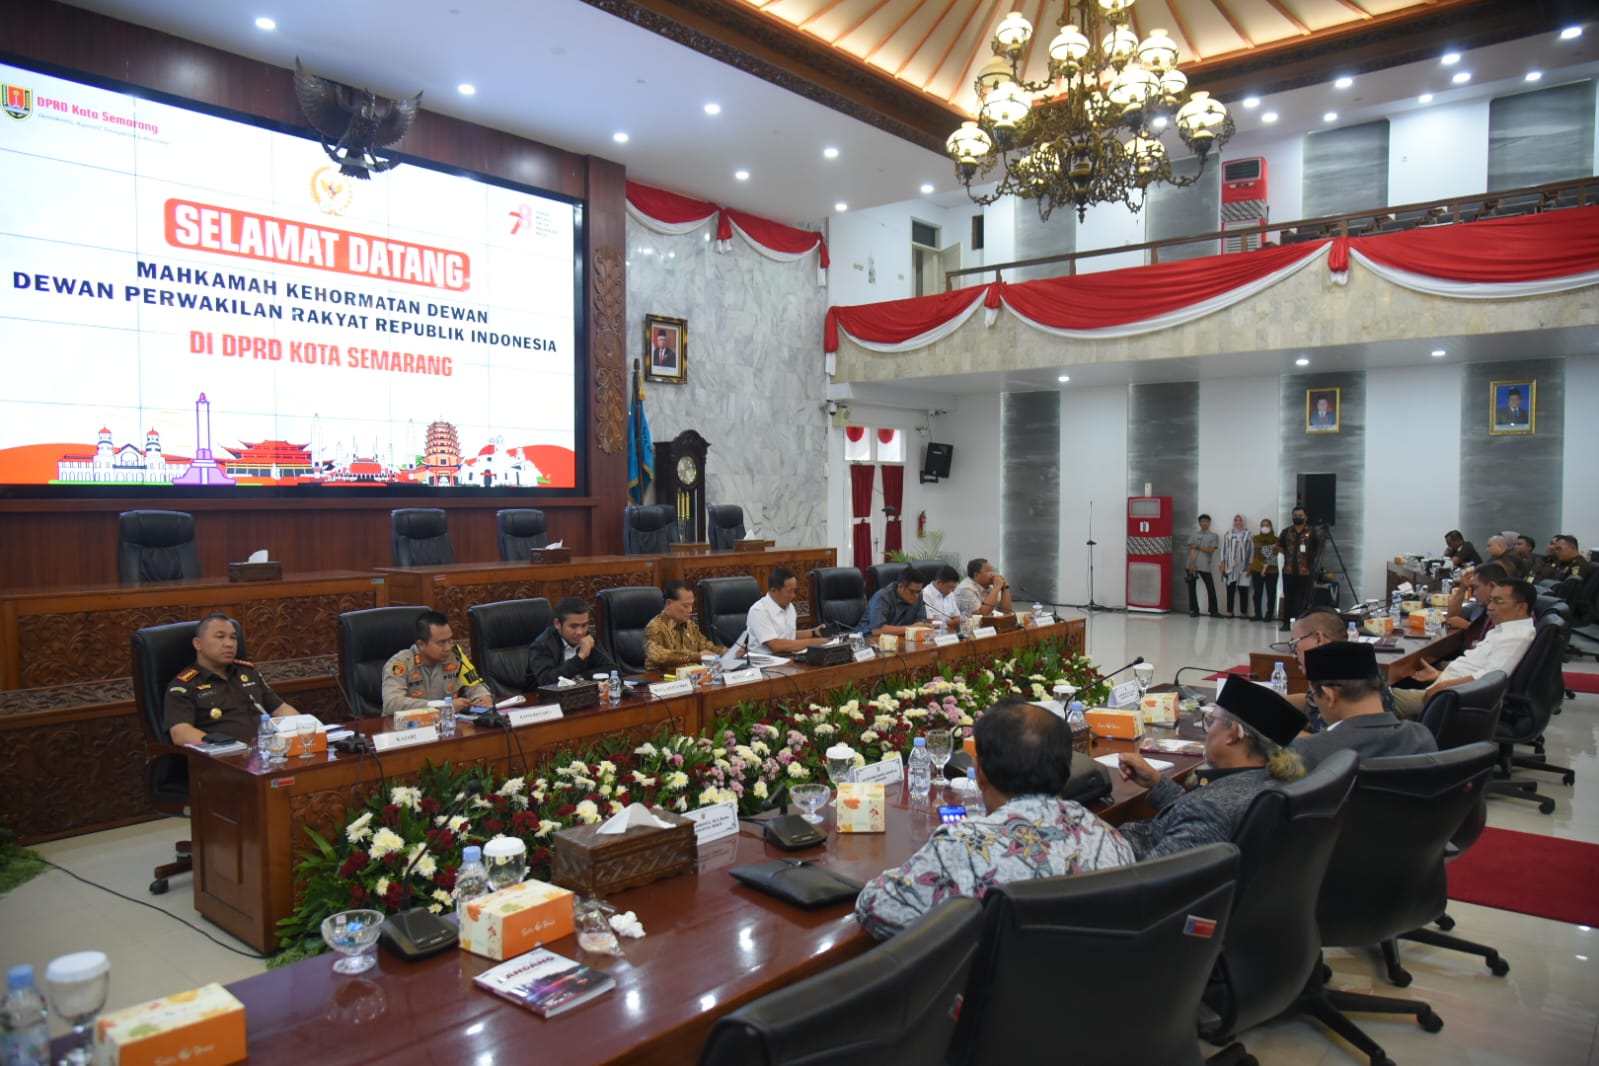 Sosialisasi MKD DPR RI di kantor DPRD Kota Semarang (Sinpo.id/Tim Media)